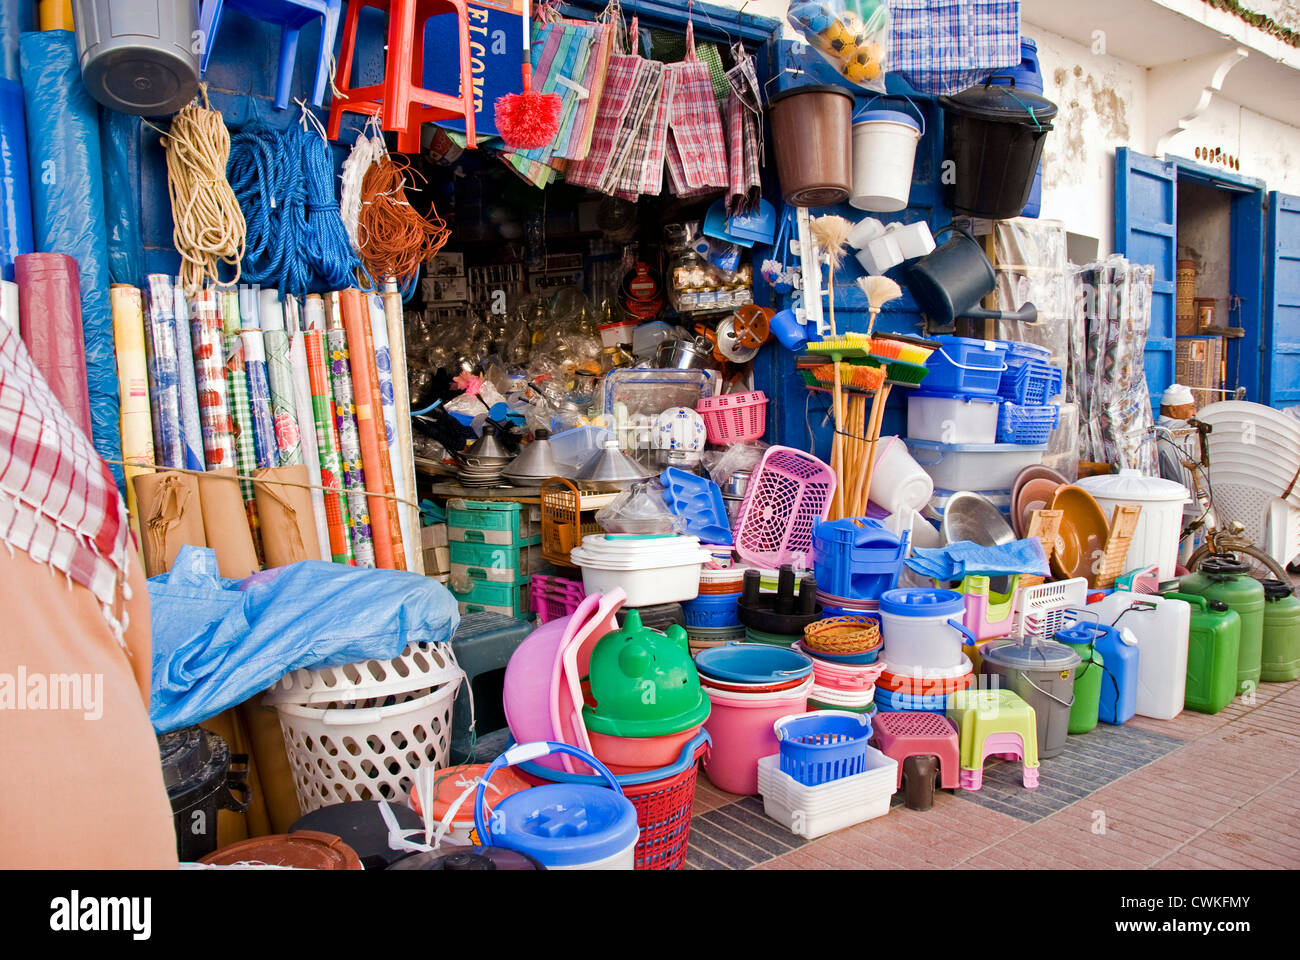 https://c8.alamy.com/comp/CWKFMY/hardware-shop-selling-cheap-plastic-household-items-essaouira-morocco-CWKFMY.jpg